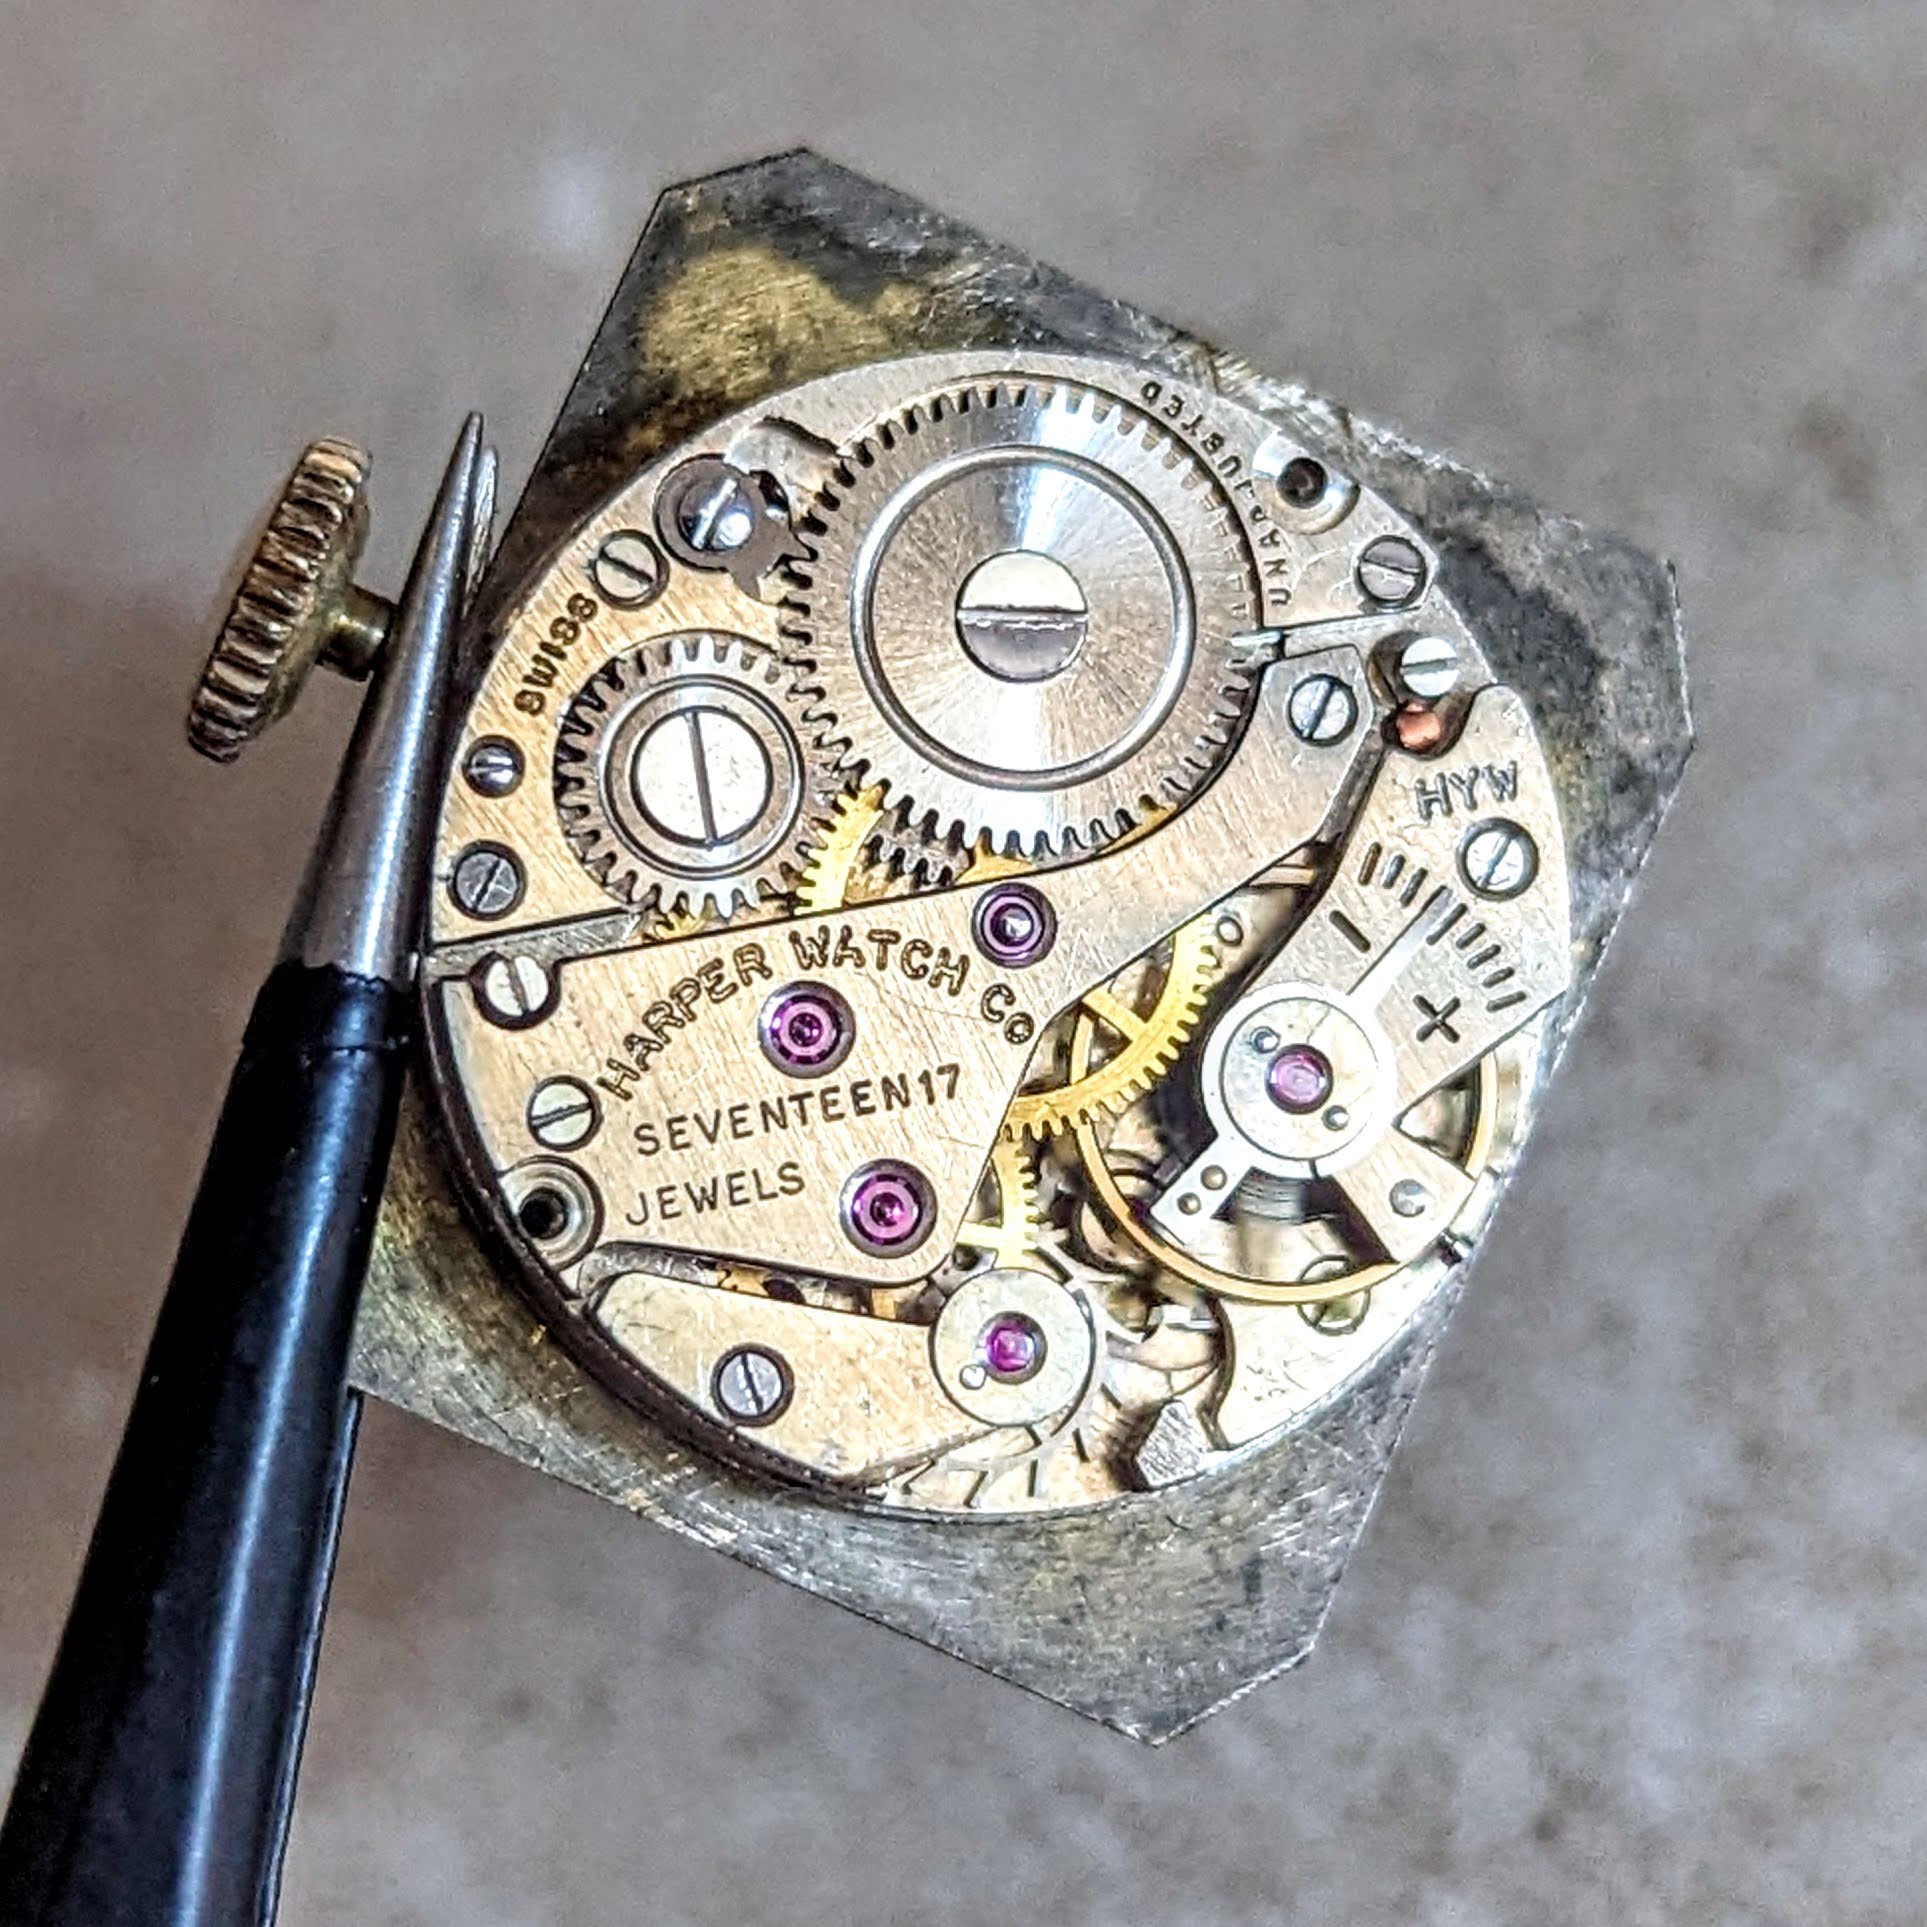 IRVINE Wristwatch by Harper Watch Co. 17 Jewels Cal. AS 970 Swiss Made